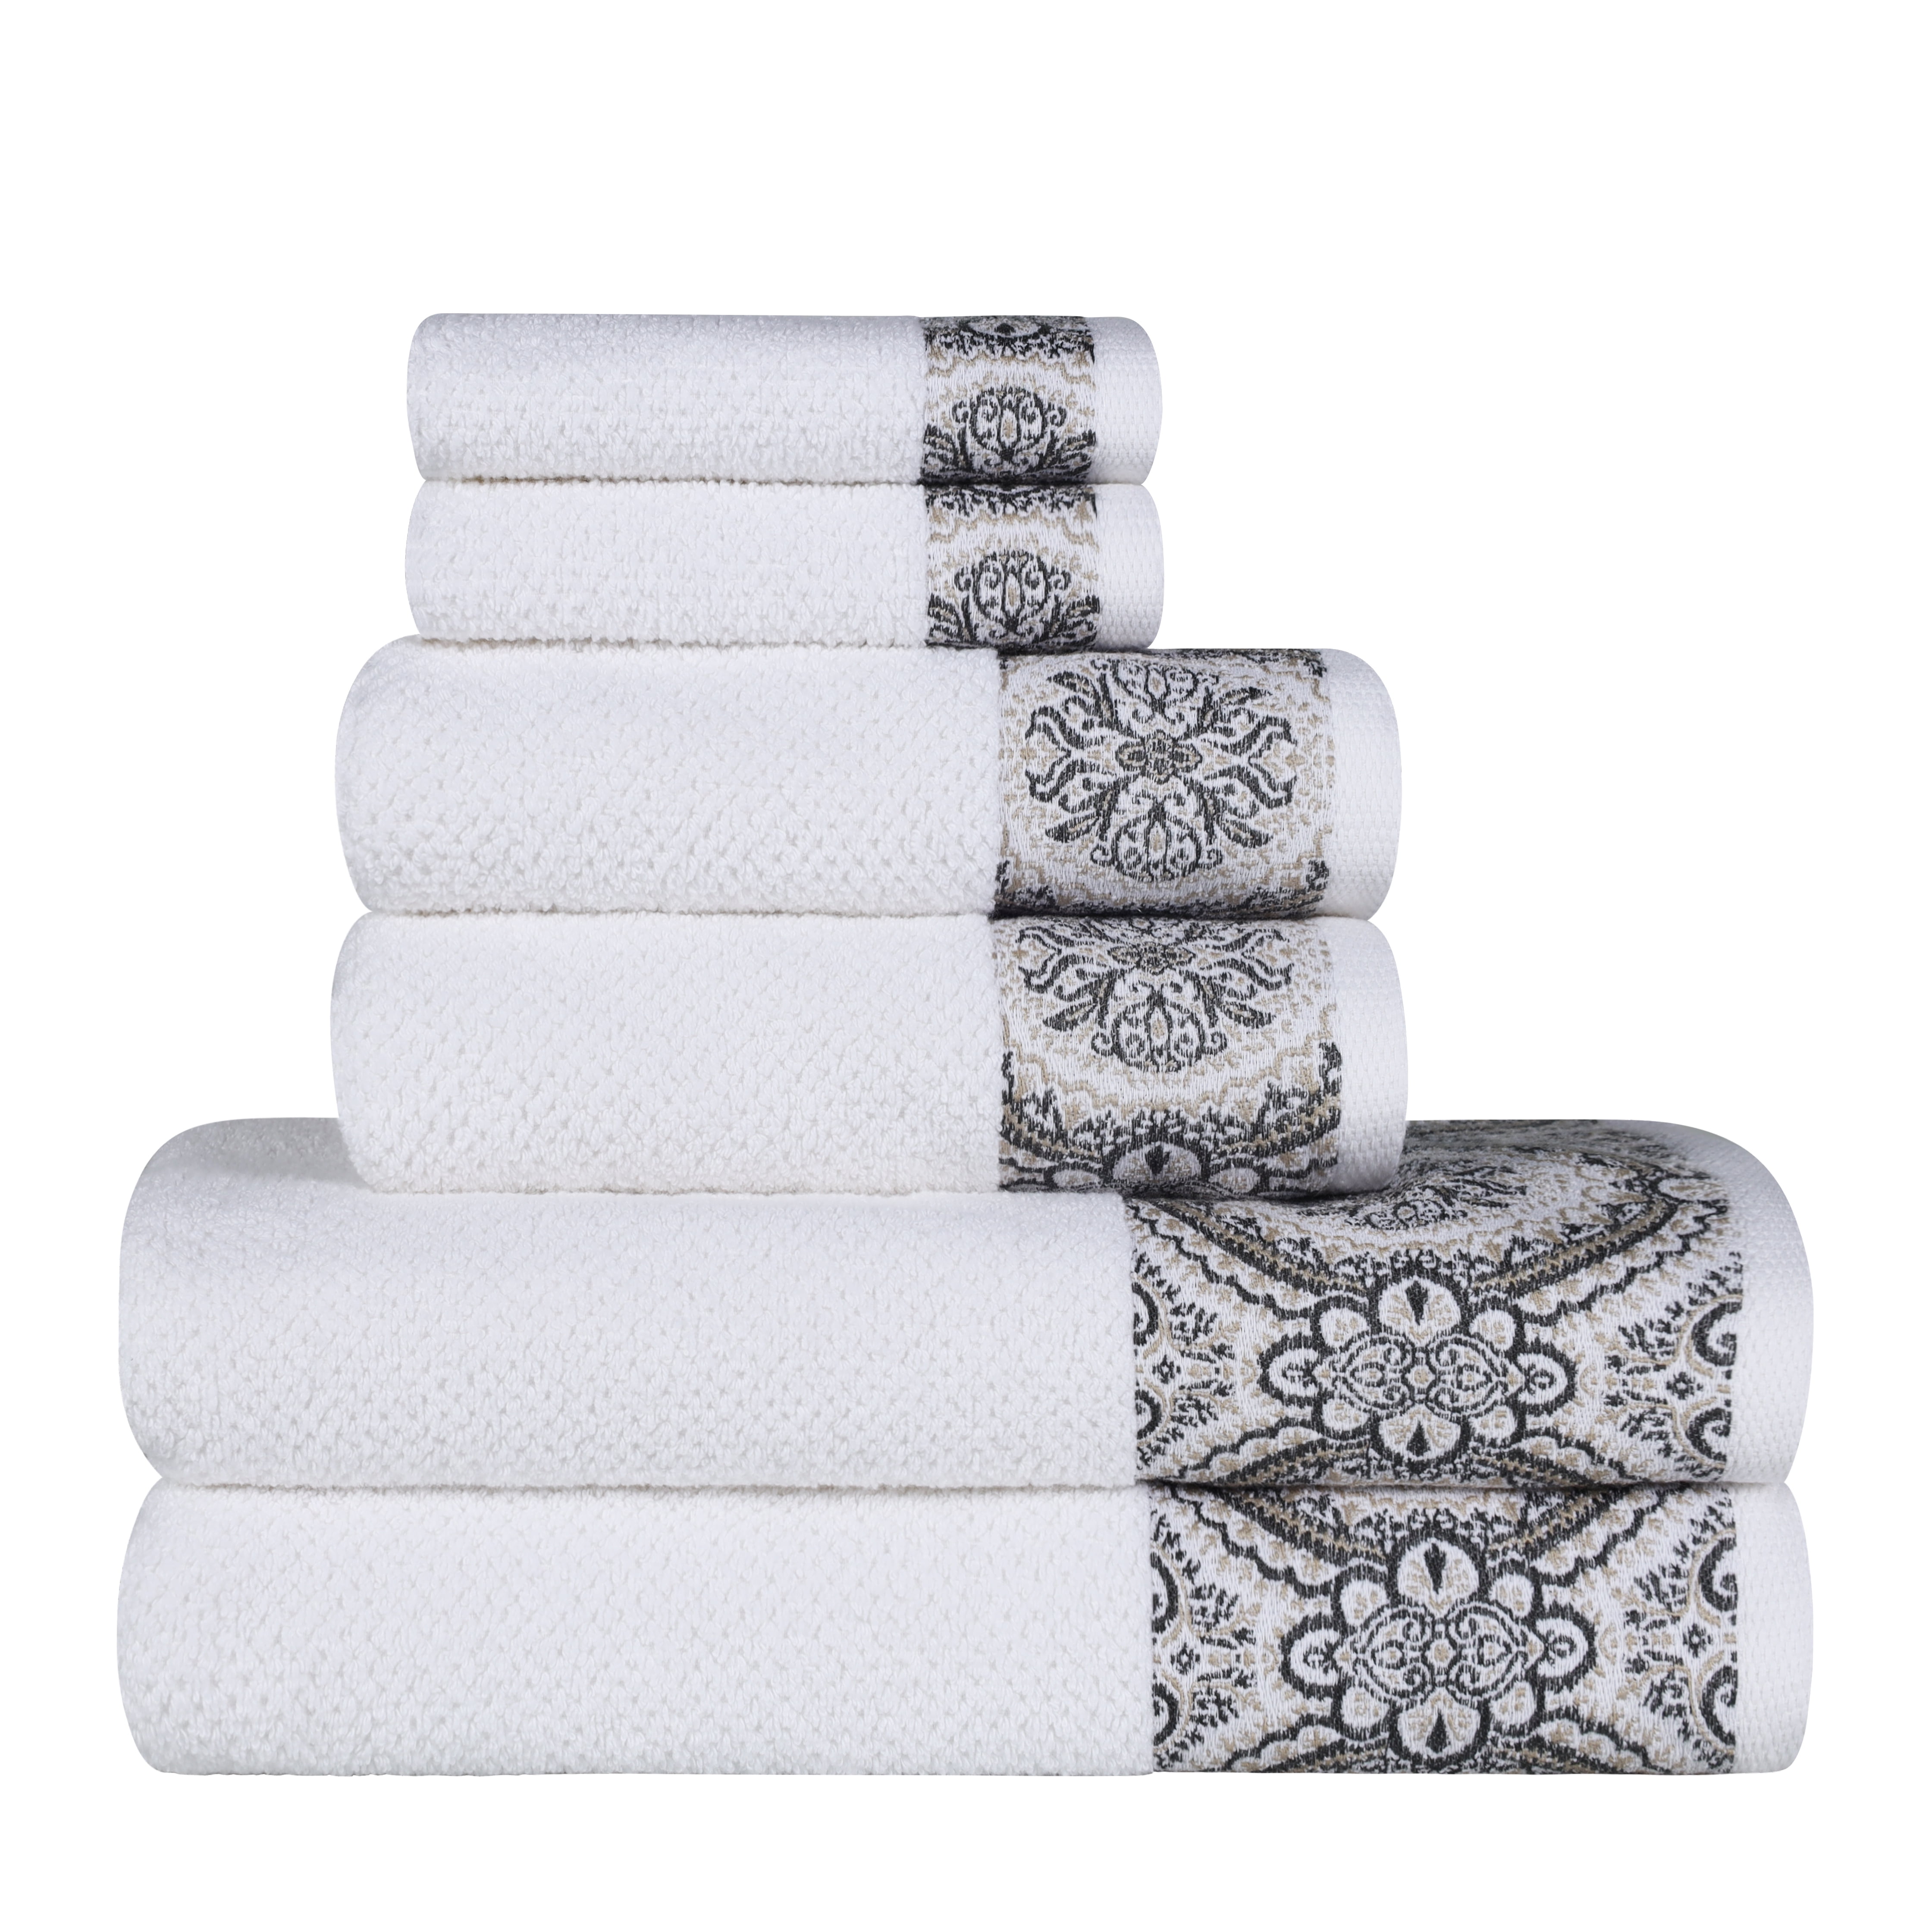 Moda At Home Allure Turkish Cotton Bath Sheet (White)